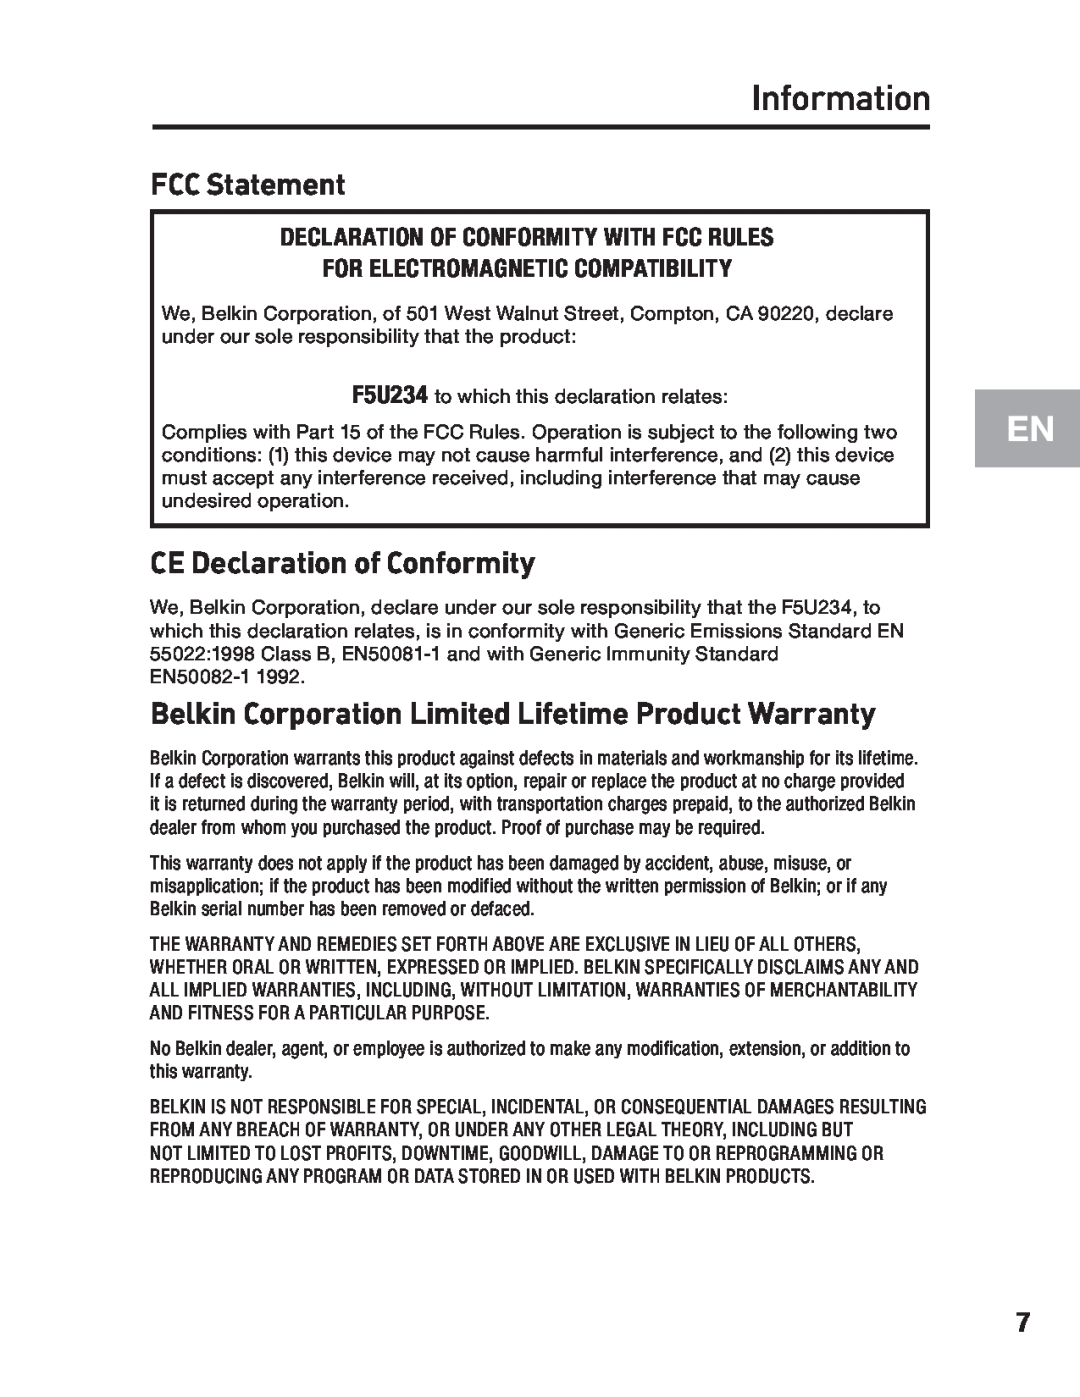 Belkin F5U234 user manual Information, FCC Statement, CE Declaration of Conformity 